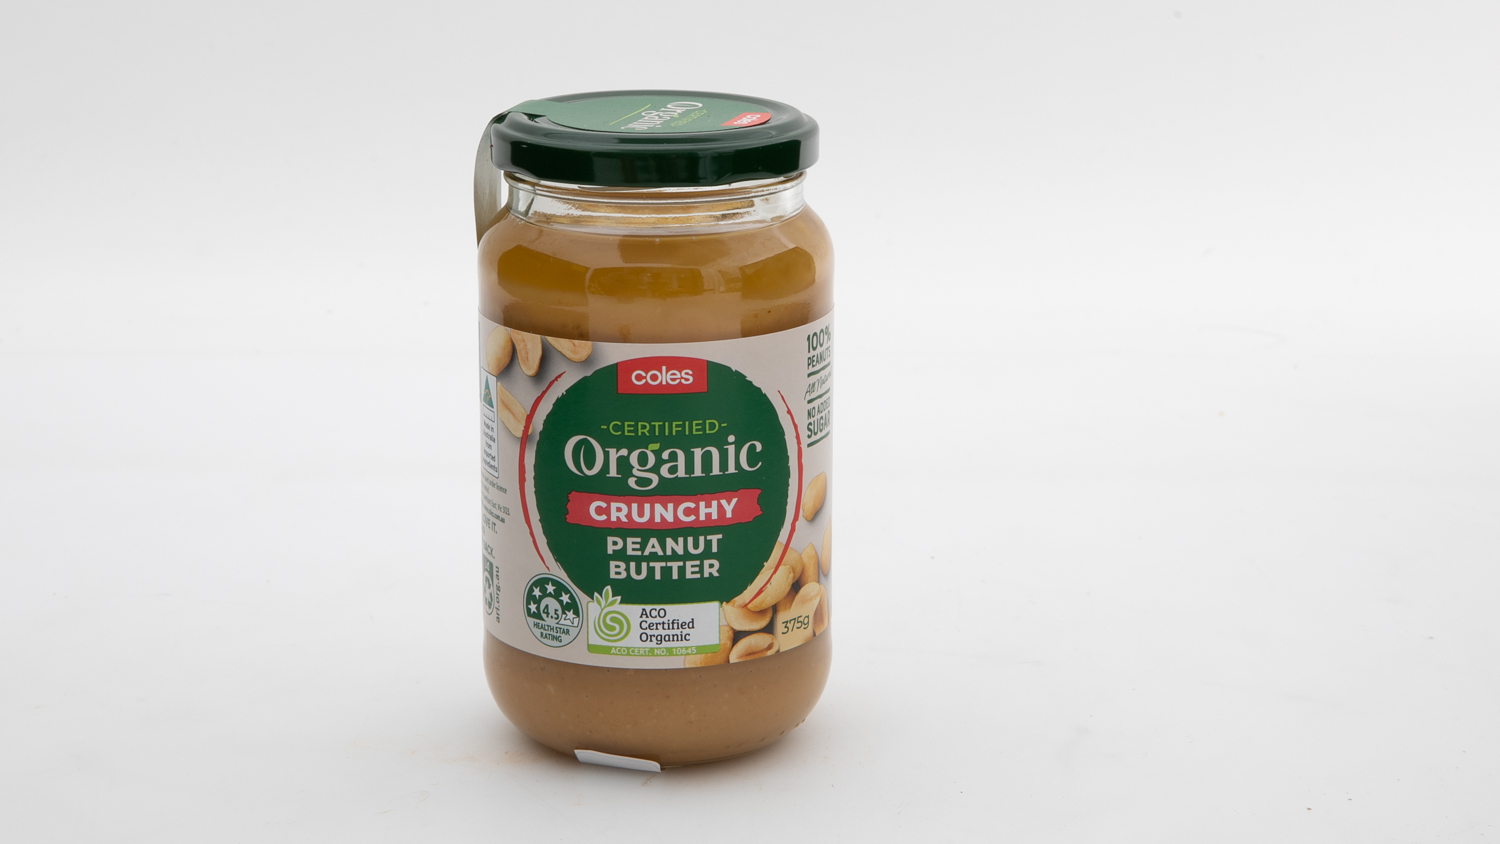 Coles Organic Peanut Butter Crunchy carousel image